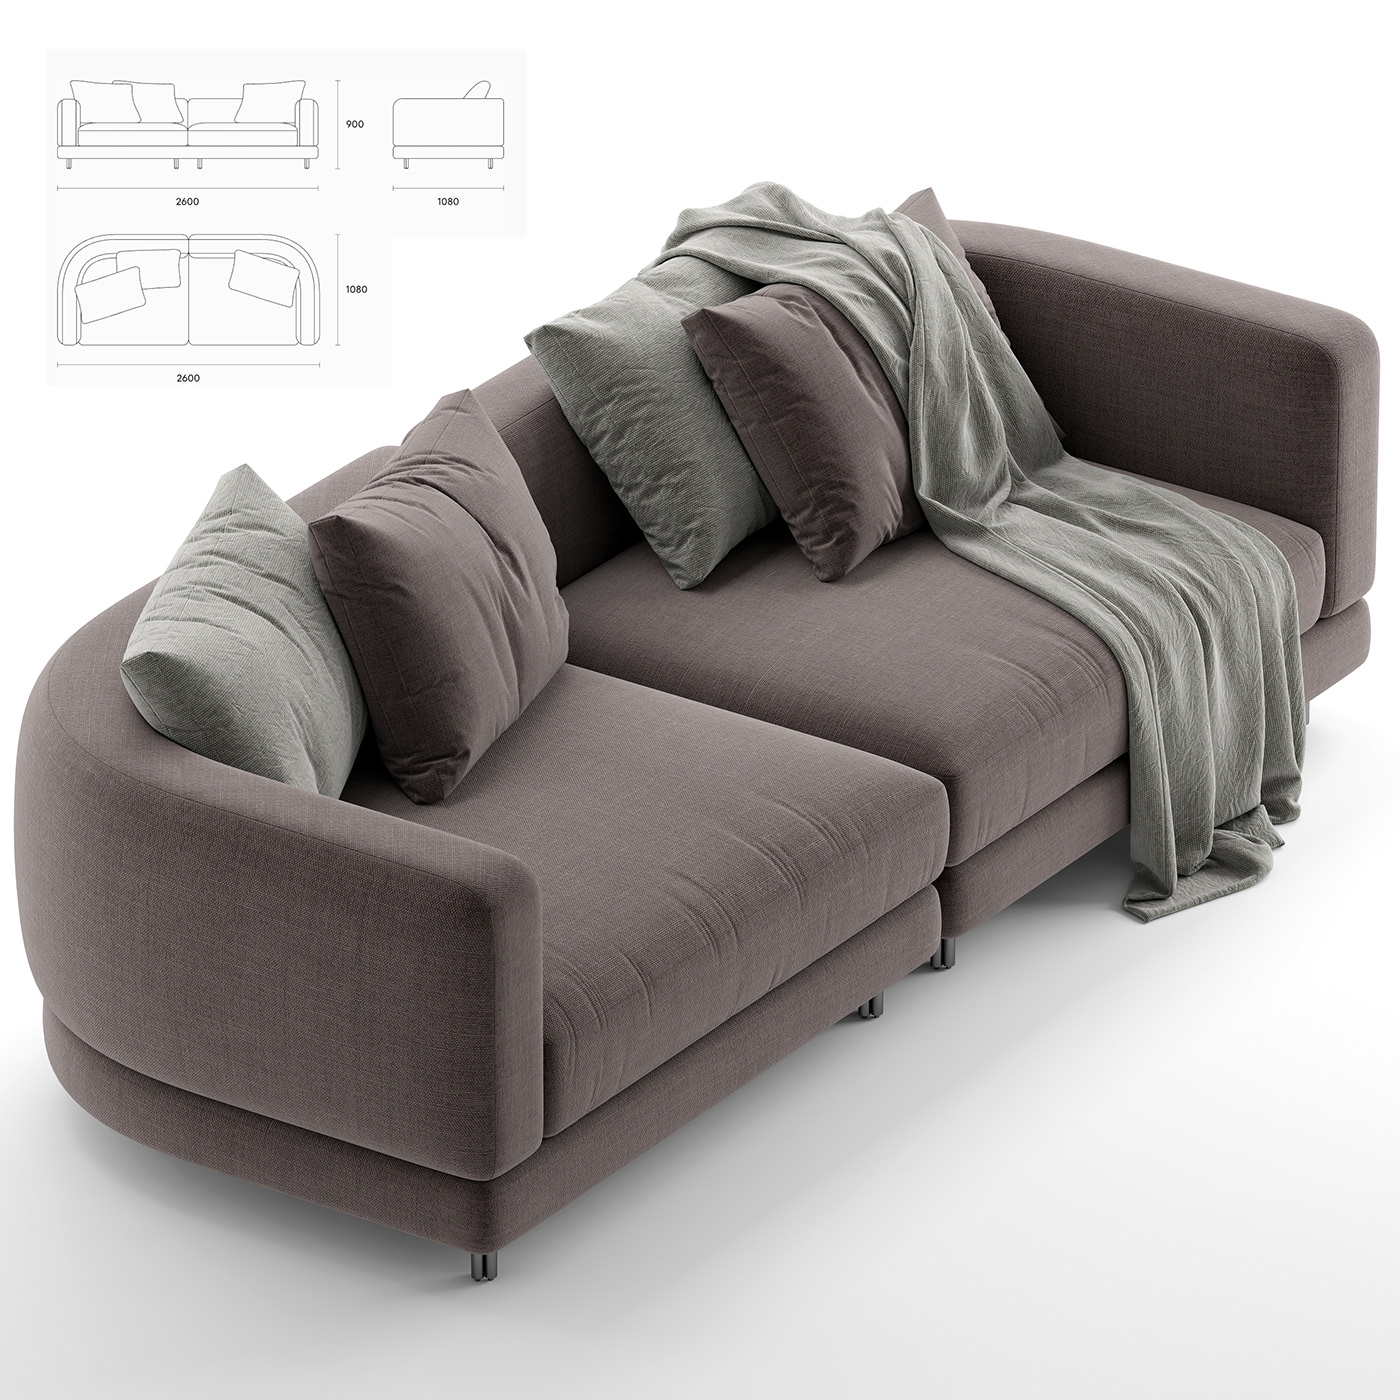 3dmodeling cgtrader corona render  living room modeling sofa texturing visualization vray